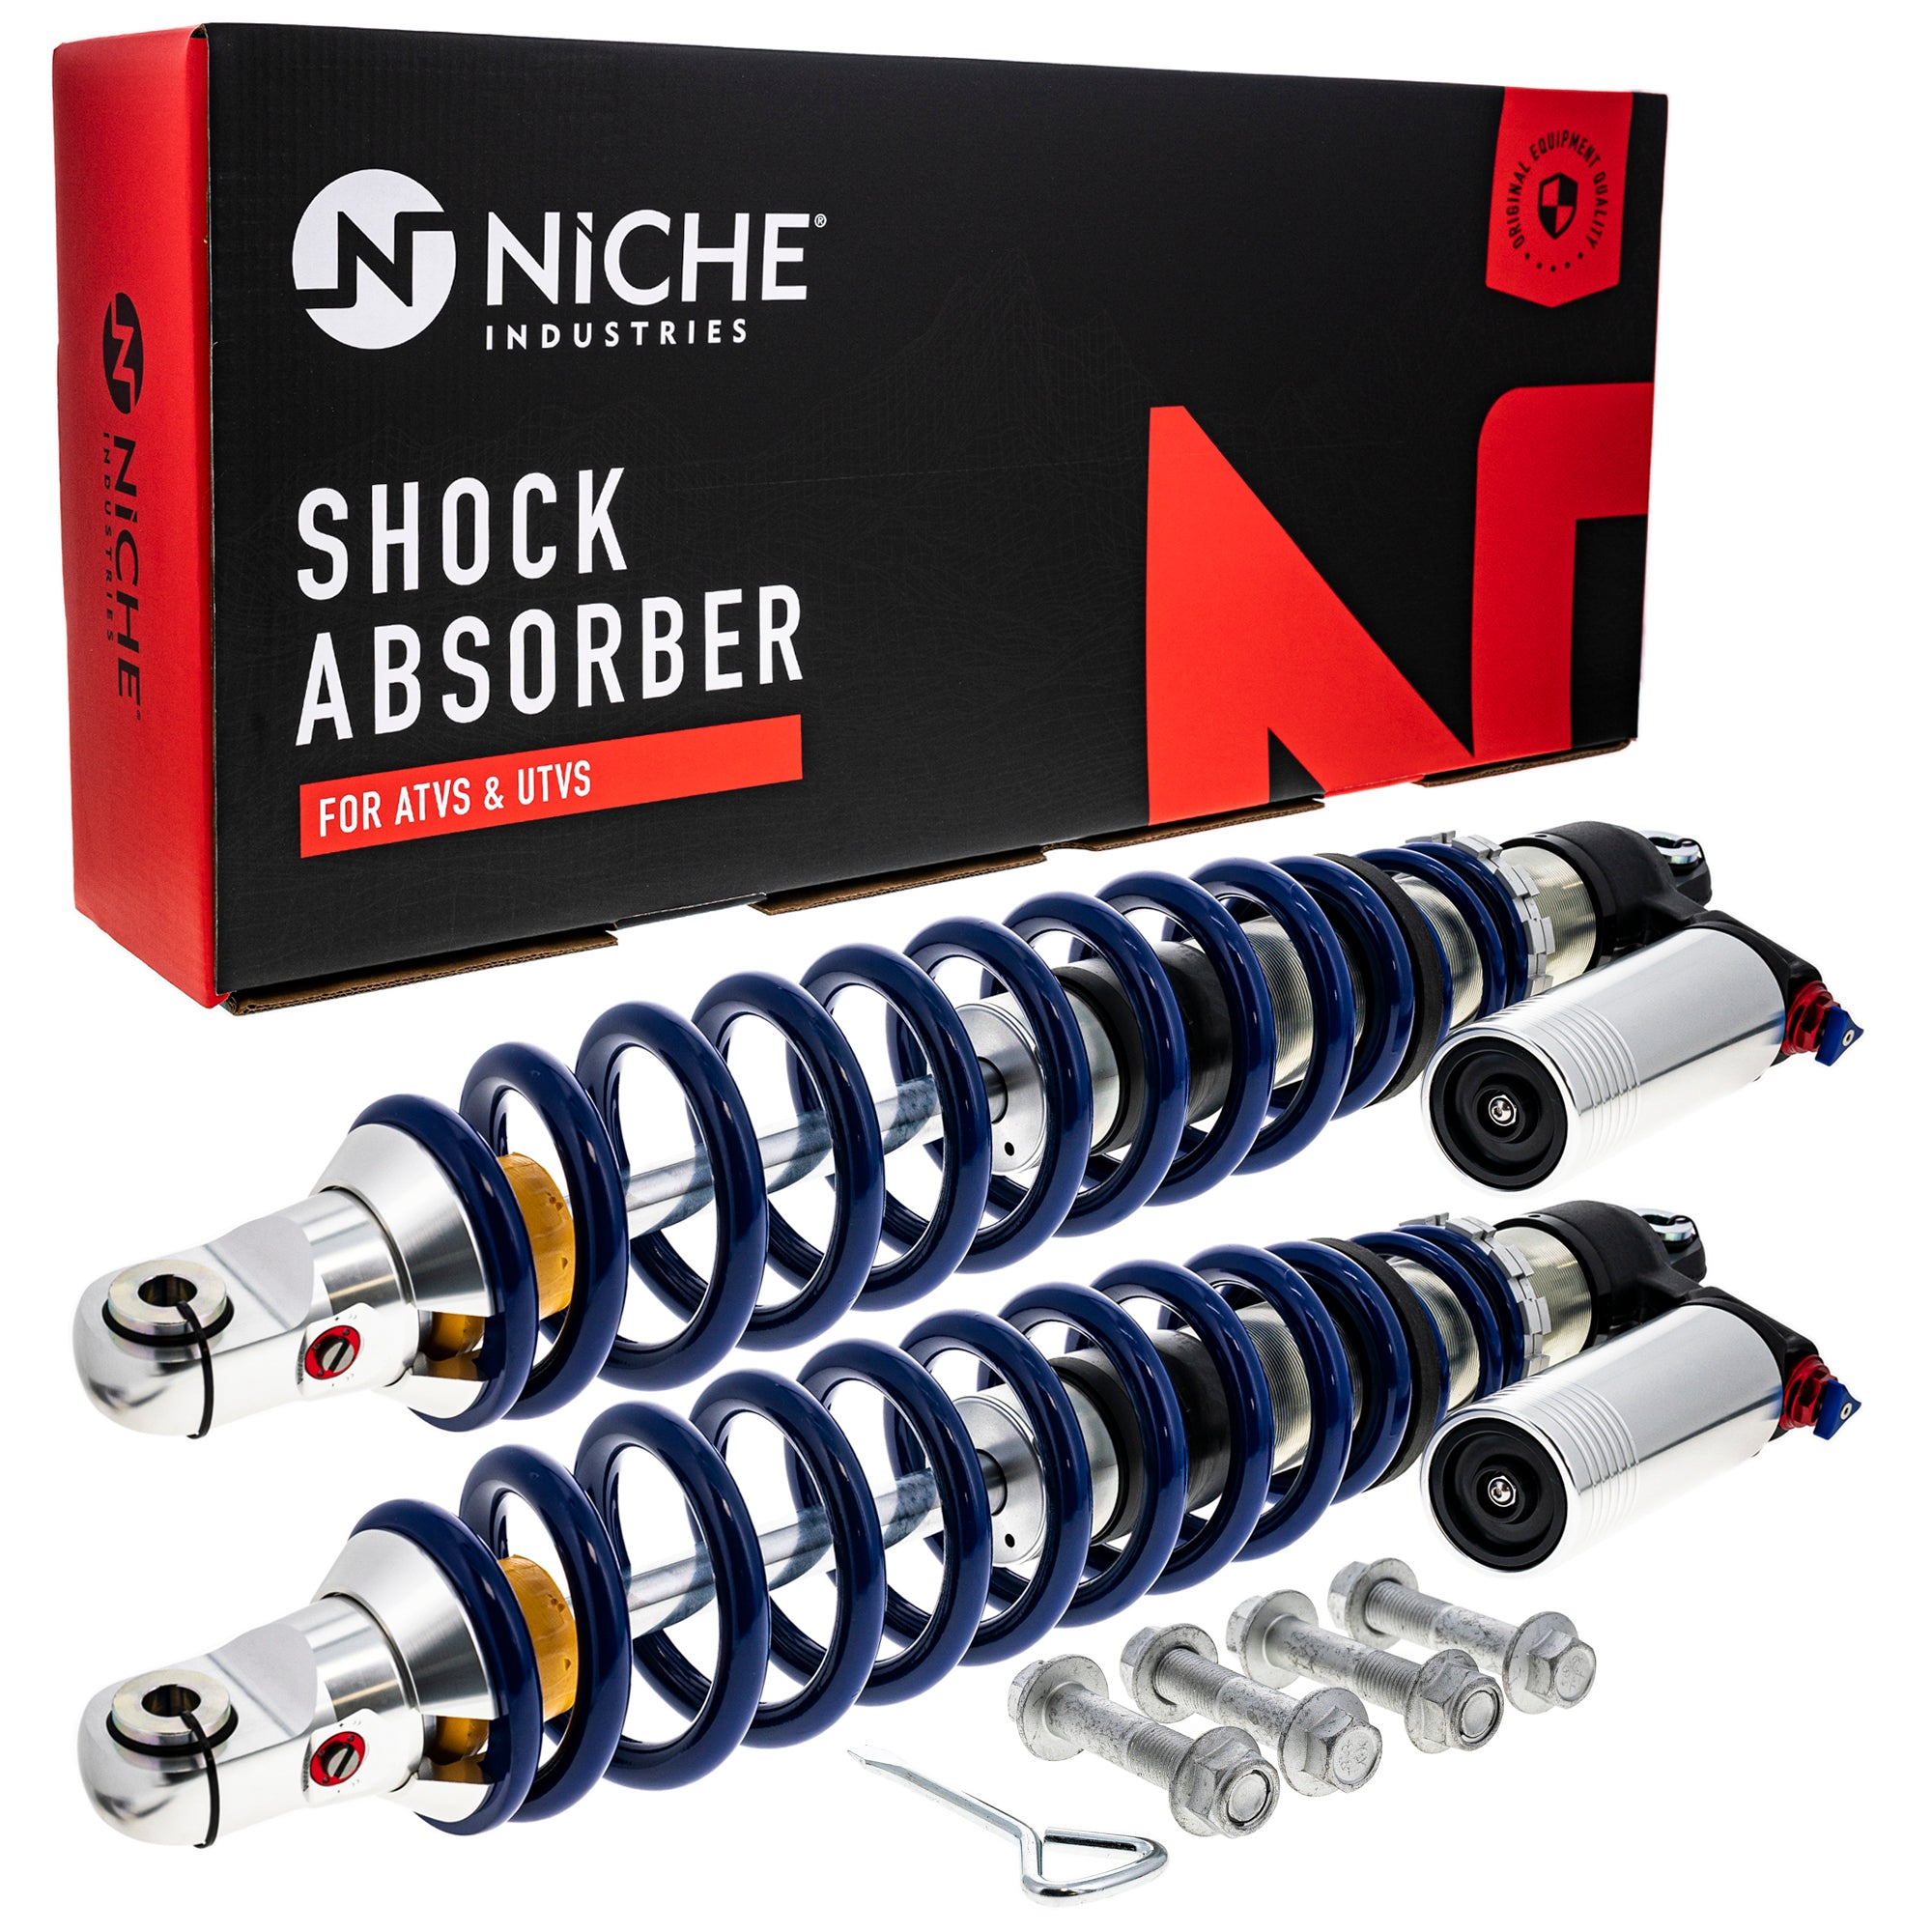 NICHE MK1008050 Shock Absorber Kit for Polaris RZR